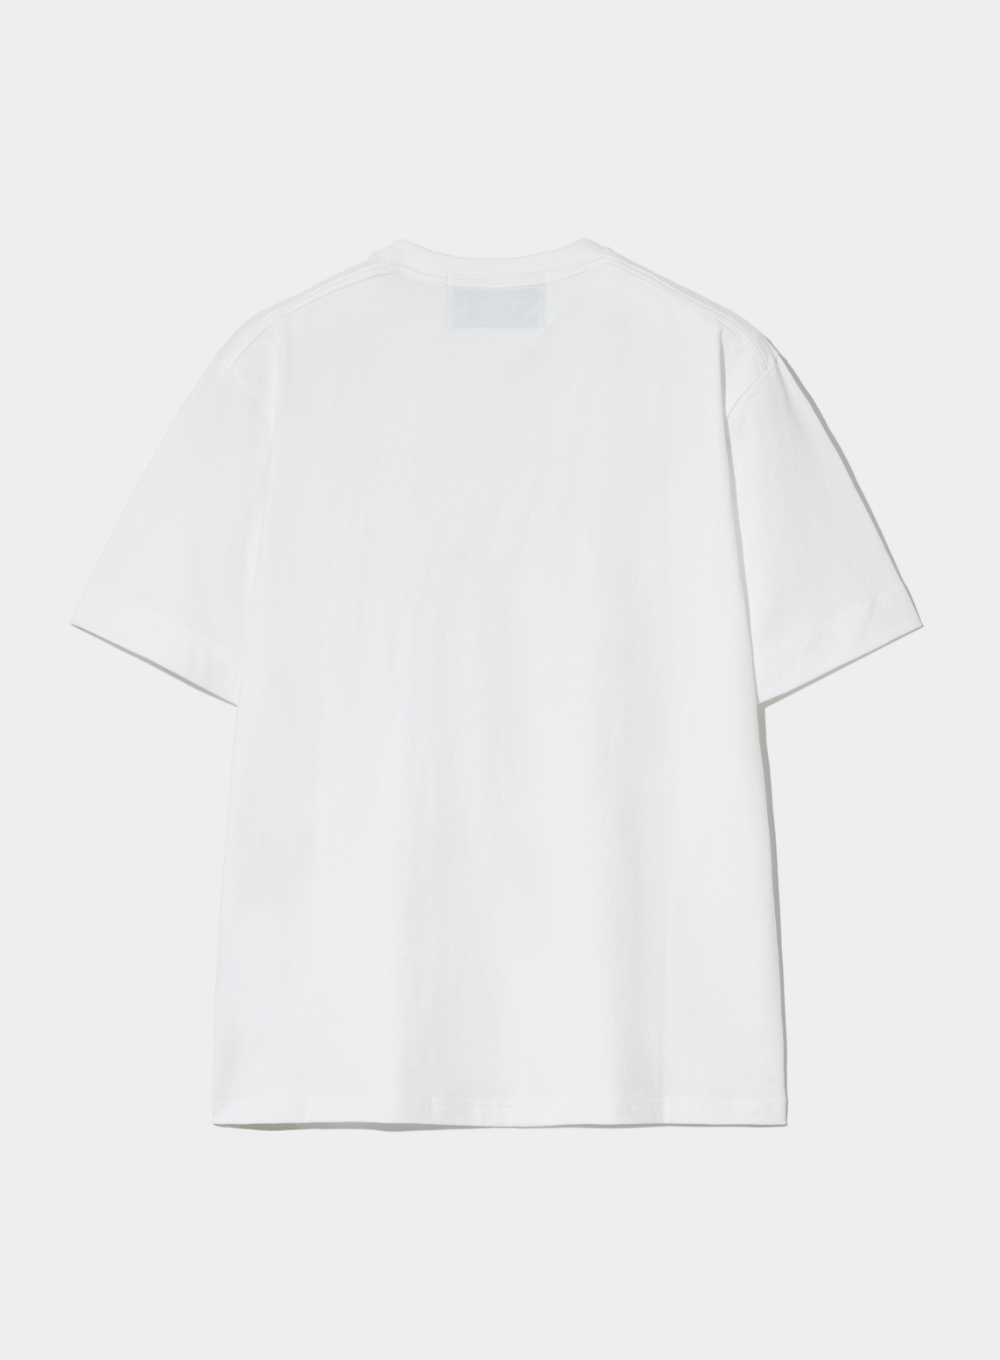 Paris Metro Graphic T-Shirt - White Navy